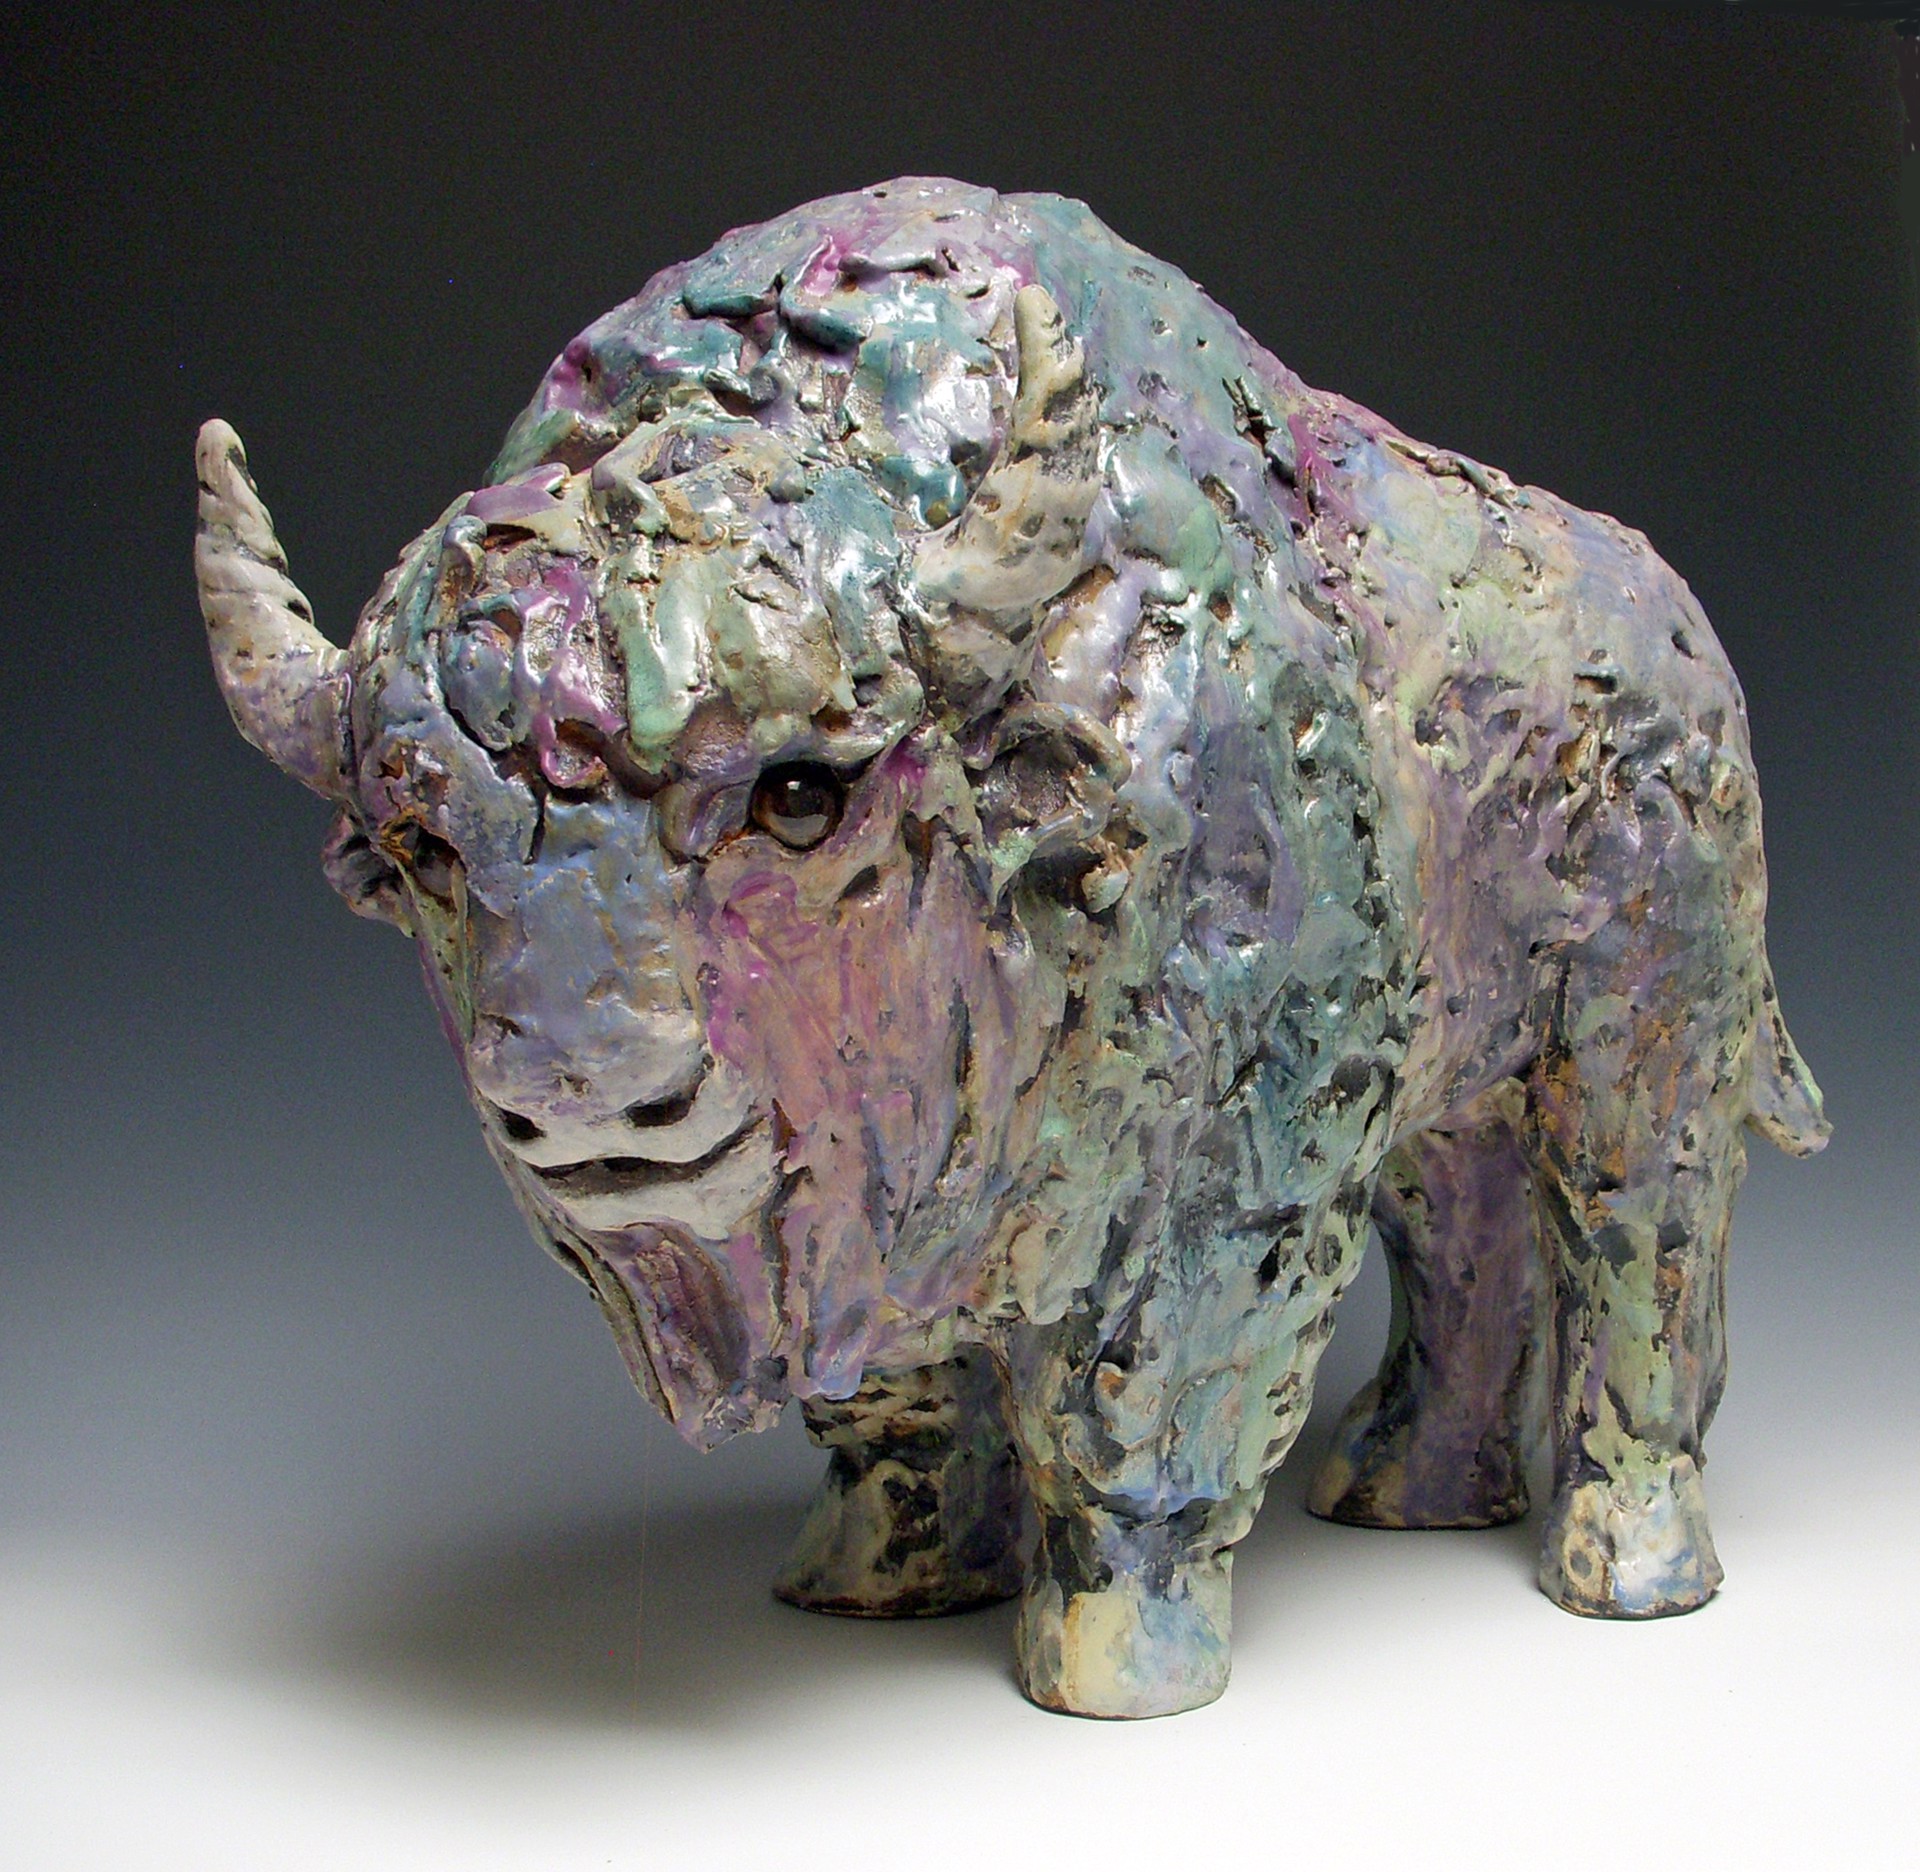 Morwenna (the bison) by Kari Rives